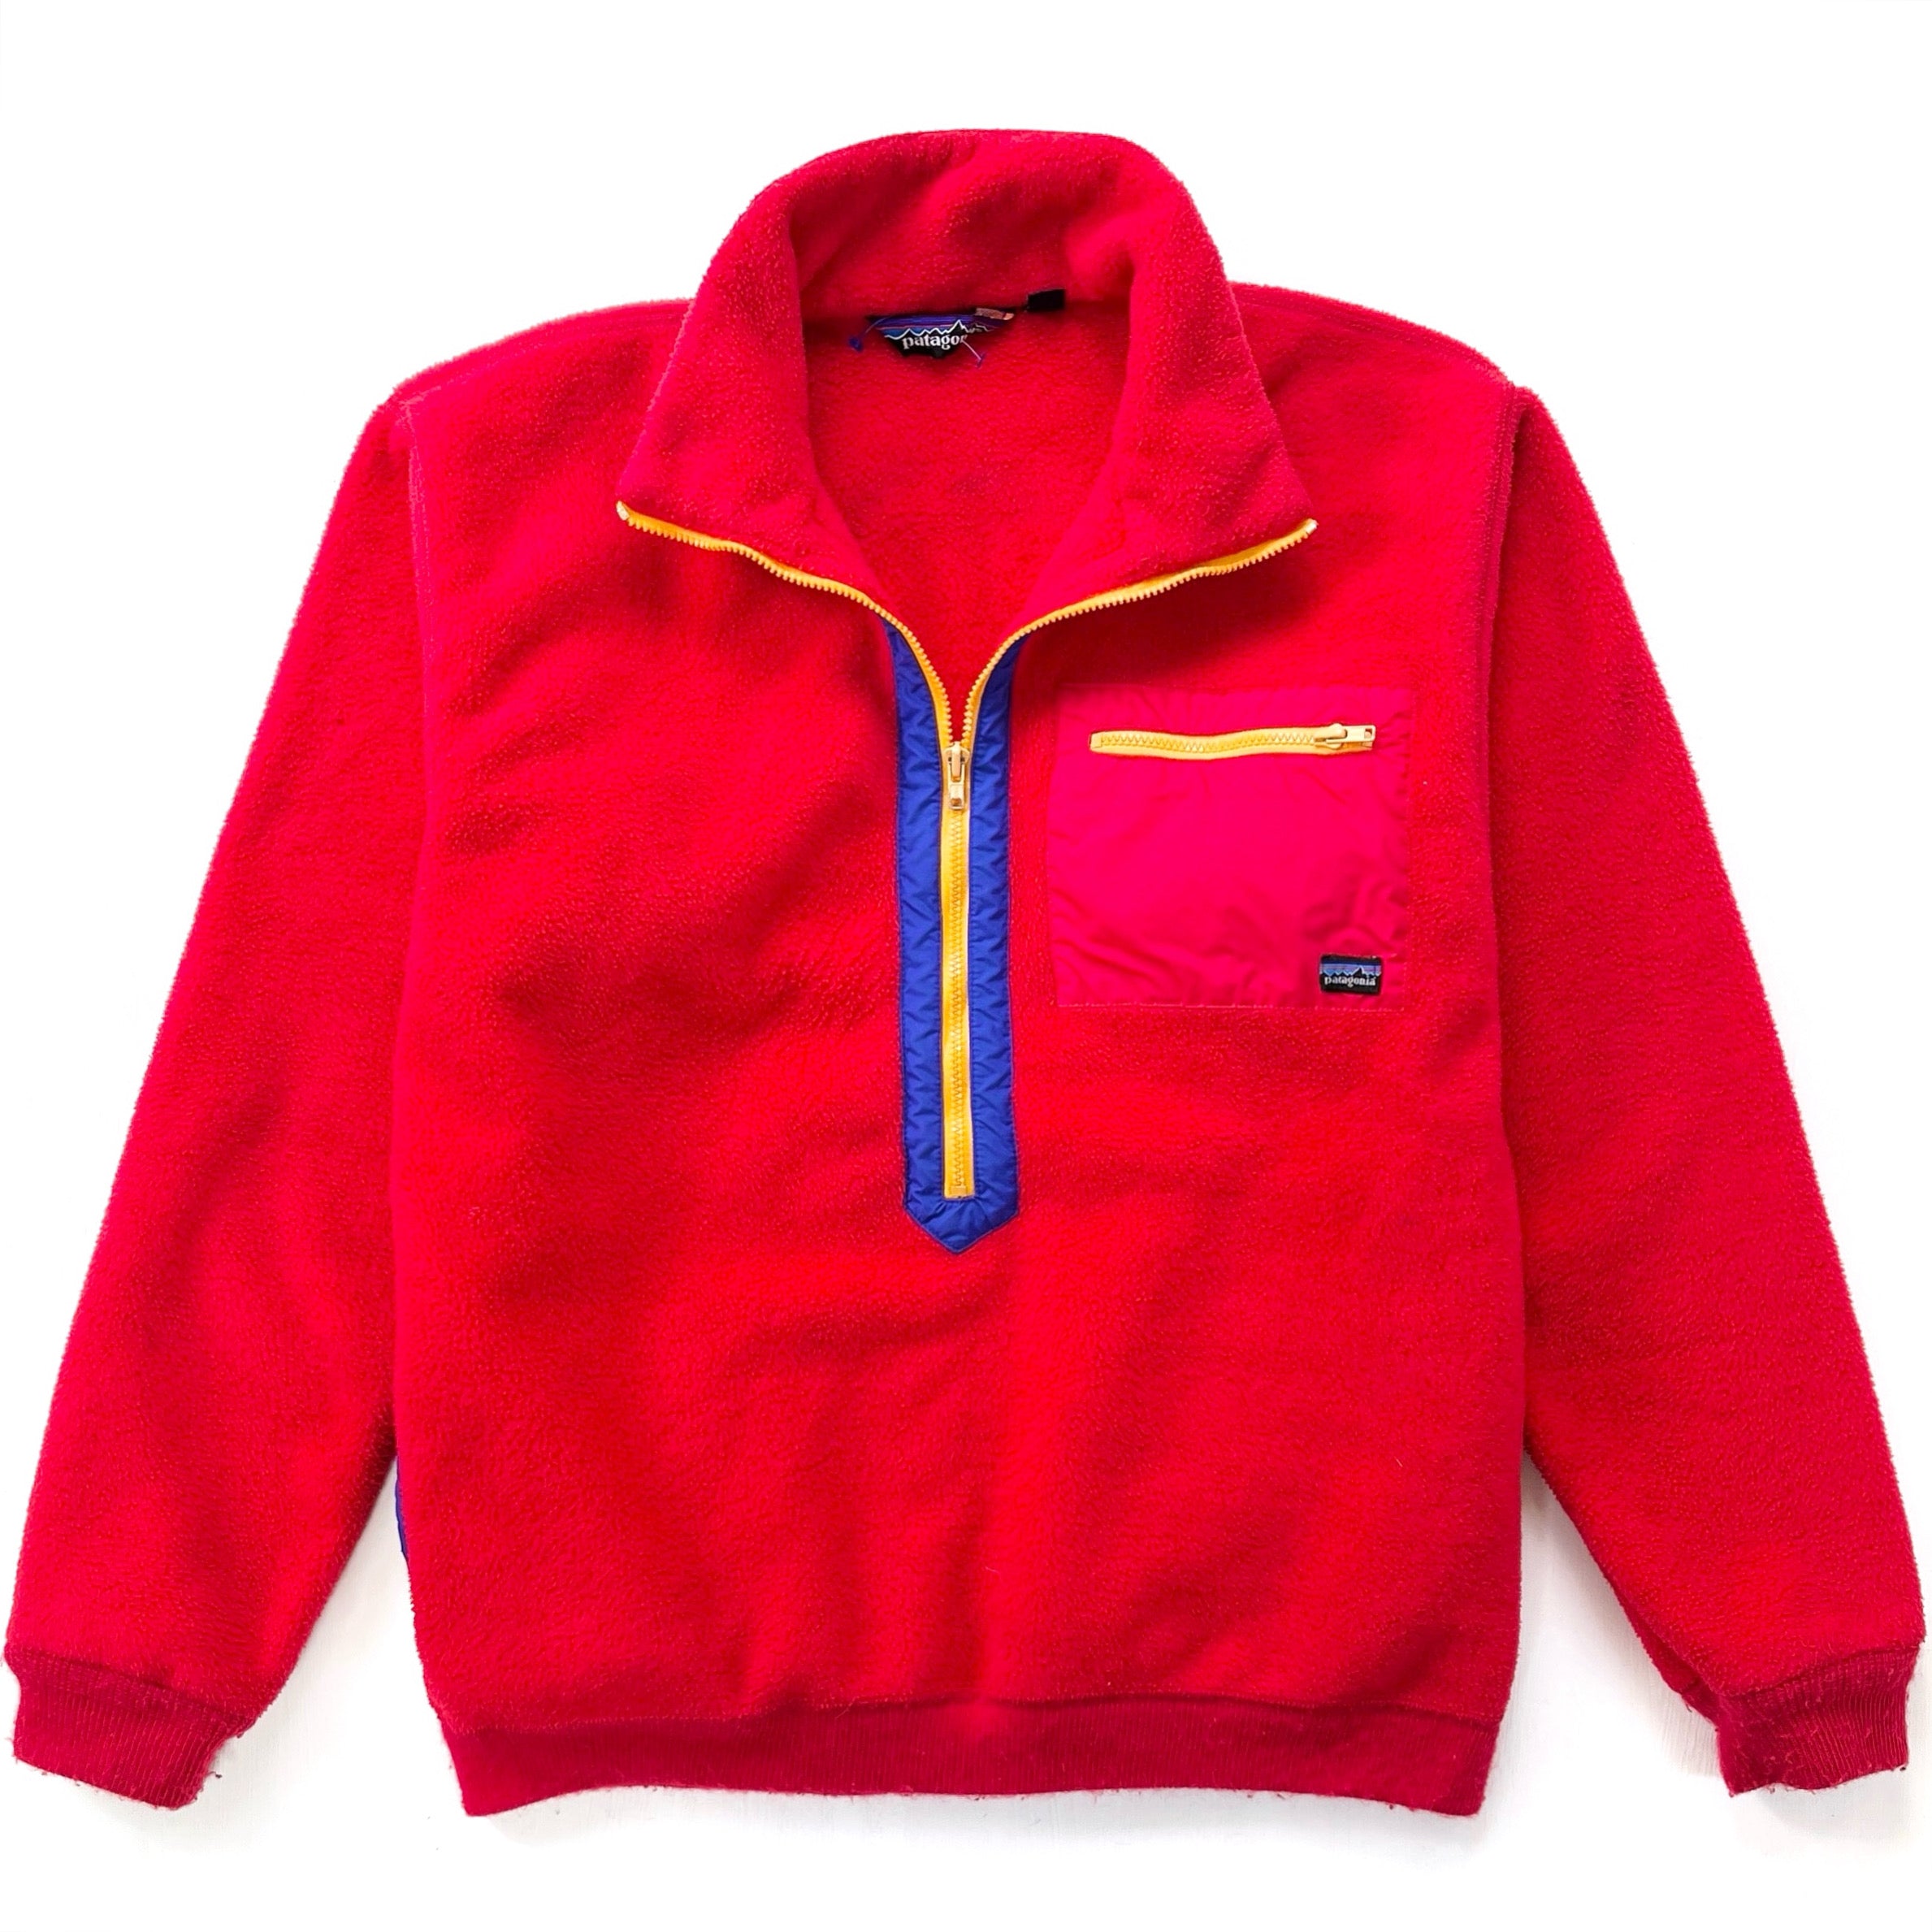 1988 Patagonia Synchilla Half-Zip Fleece Sweater, Red & Cobalt (M)